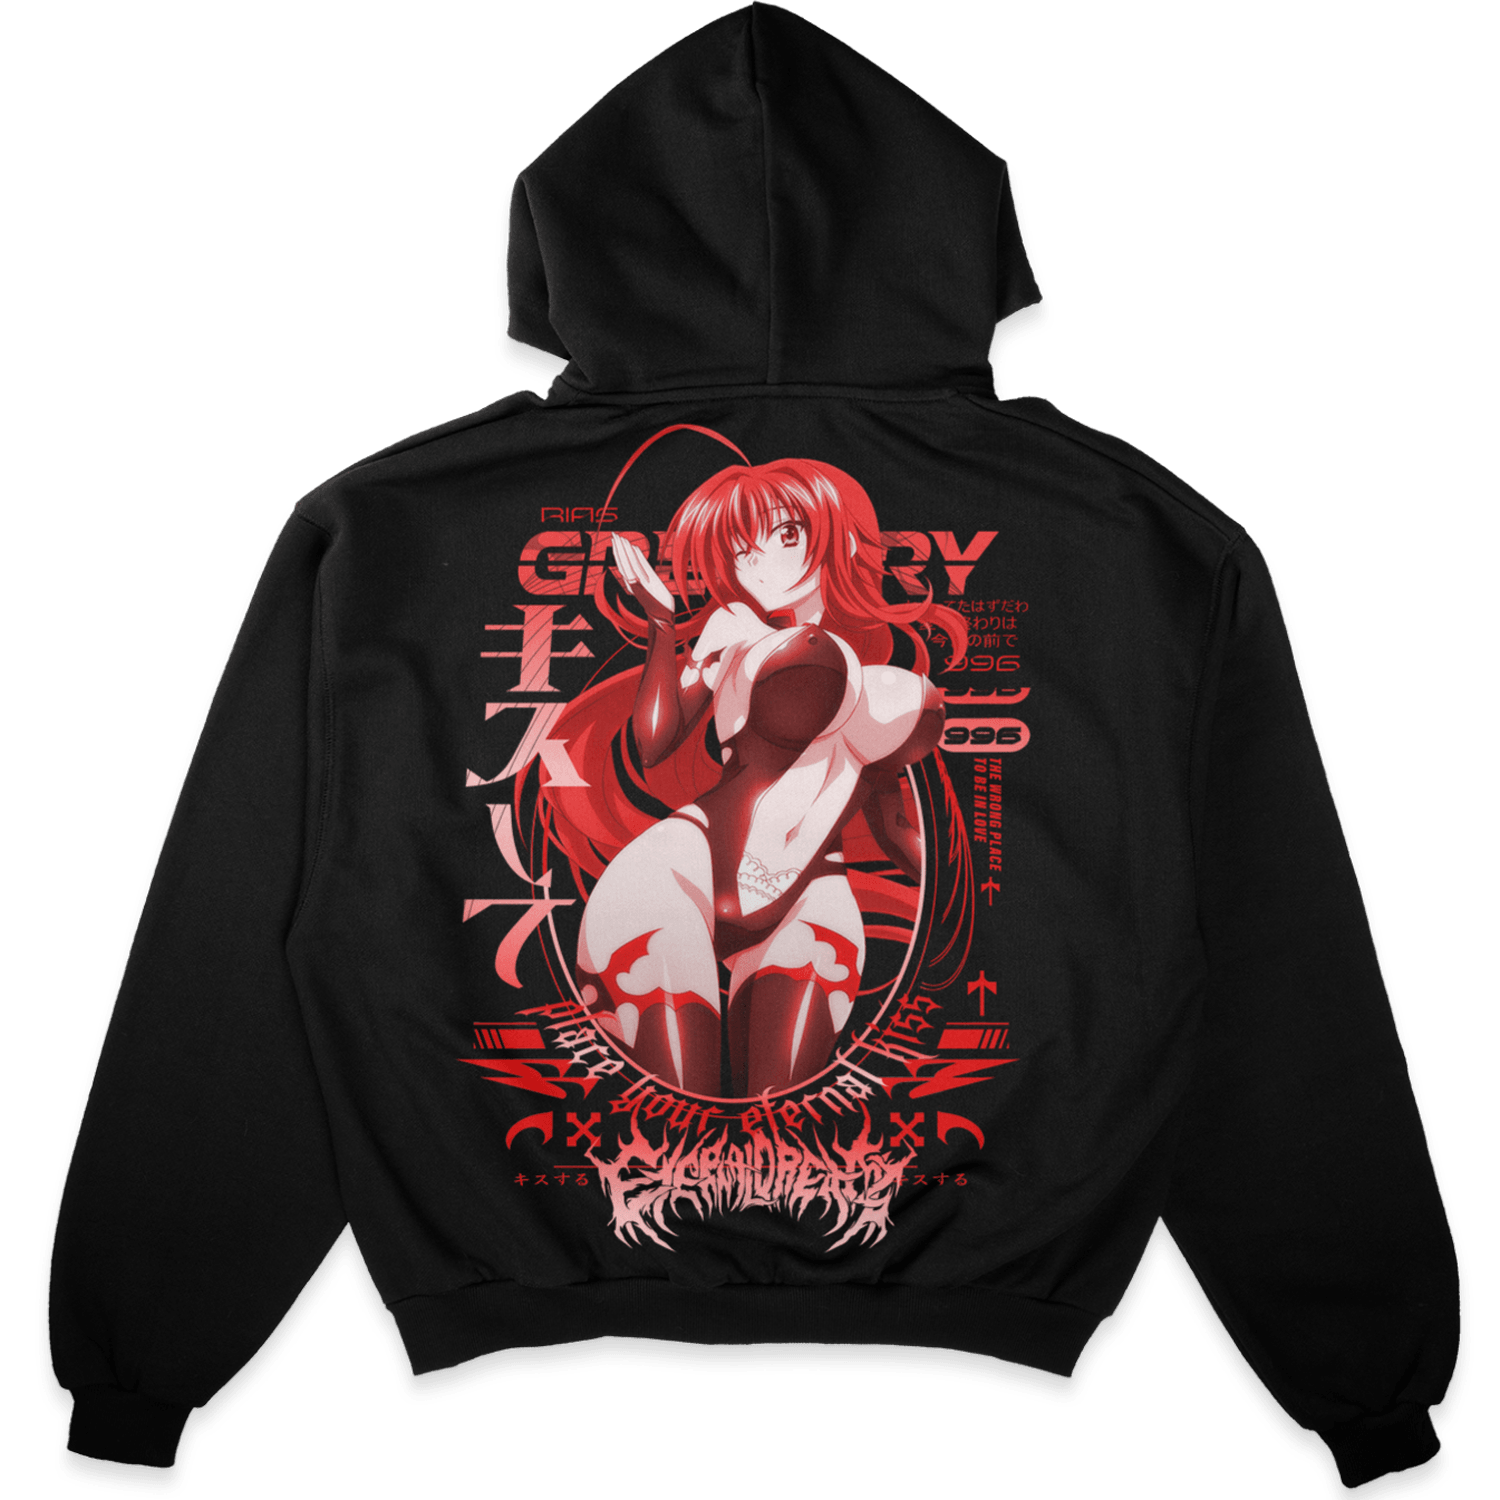 Gremory - Eternal Dreamz Clothing Anime Streetwear & Anime Clothing